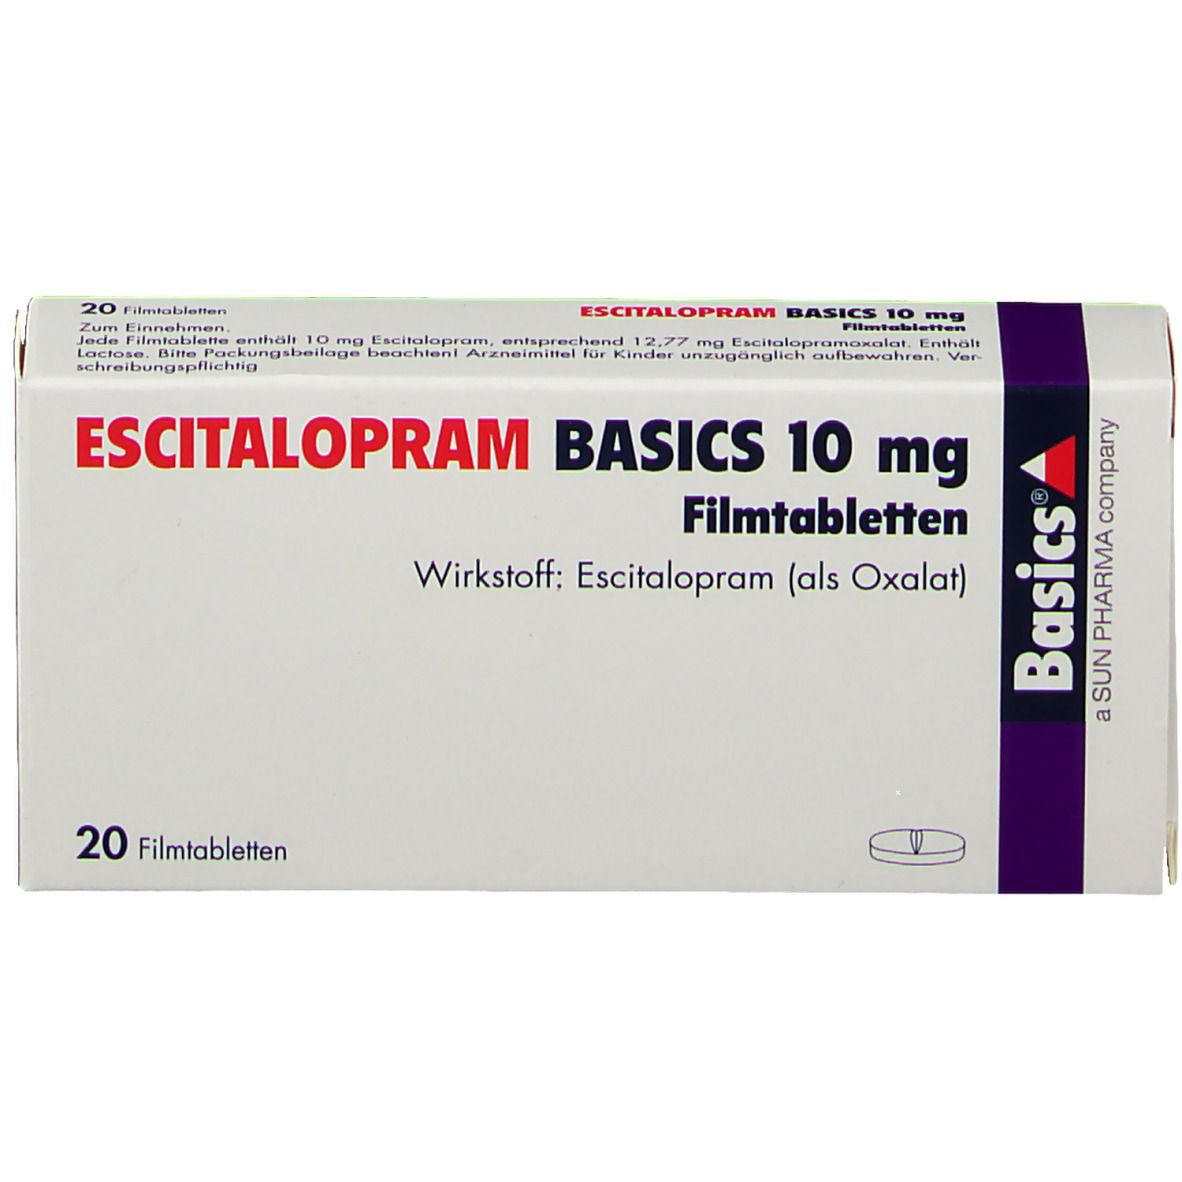 ESCITALOPRAM BASICS 10 mg